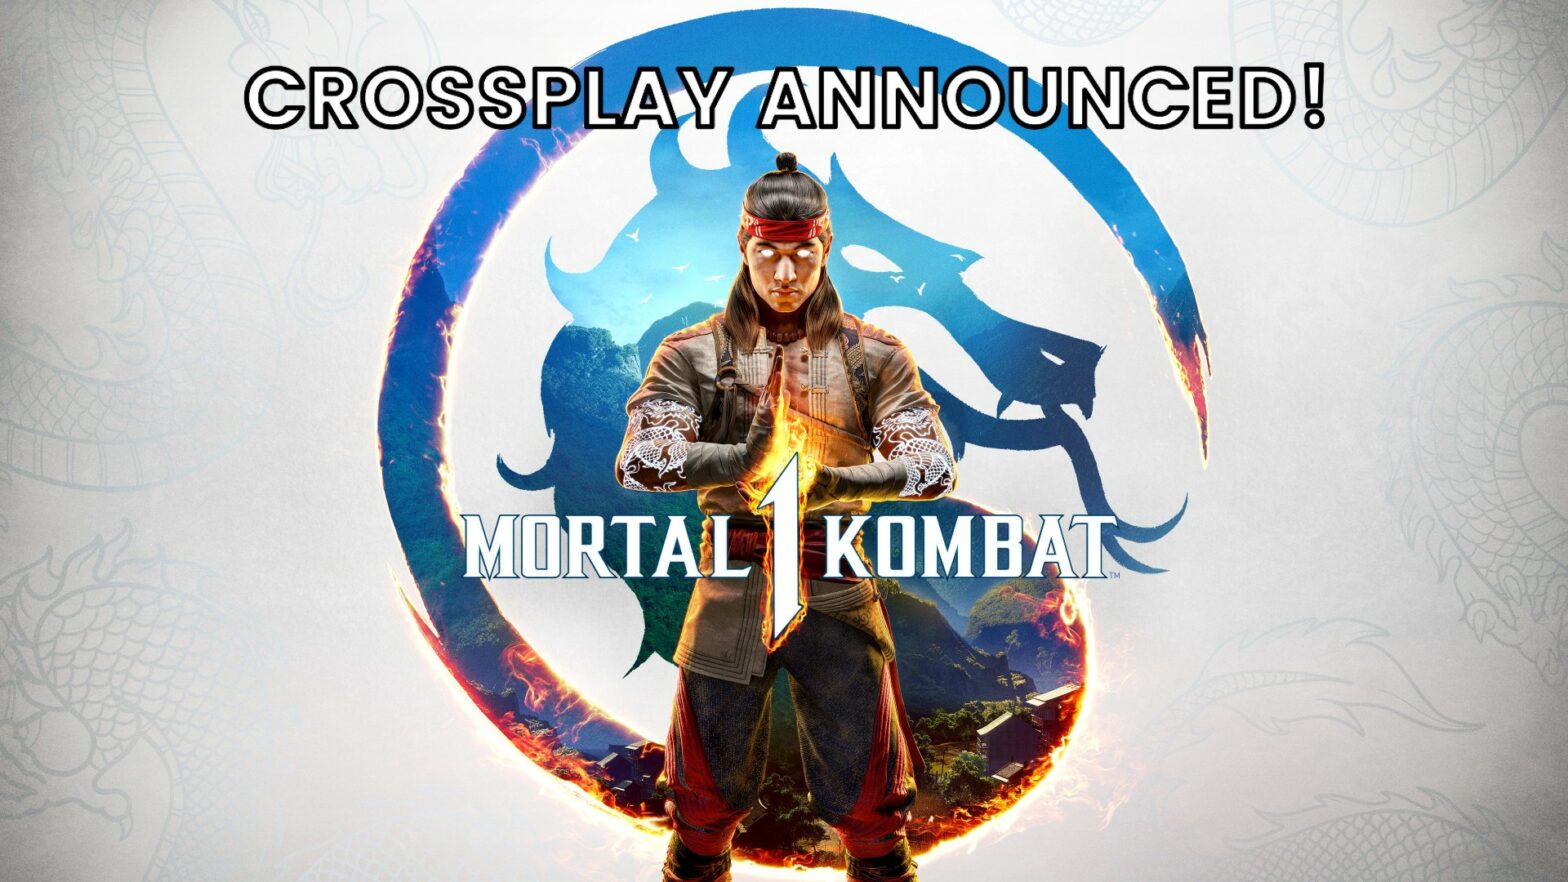 Does Mortal Kombat 1 Have Crossplay?